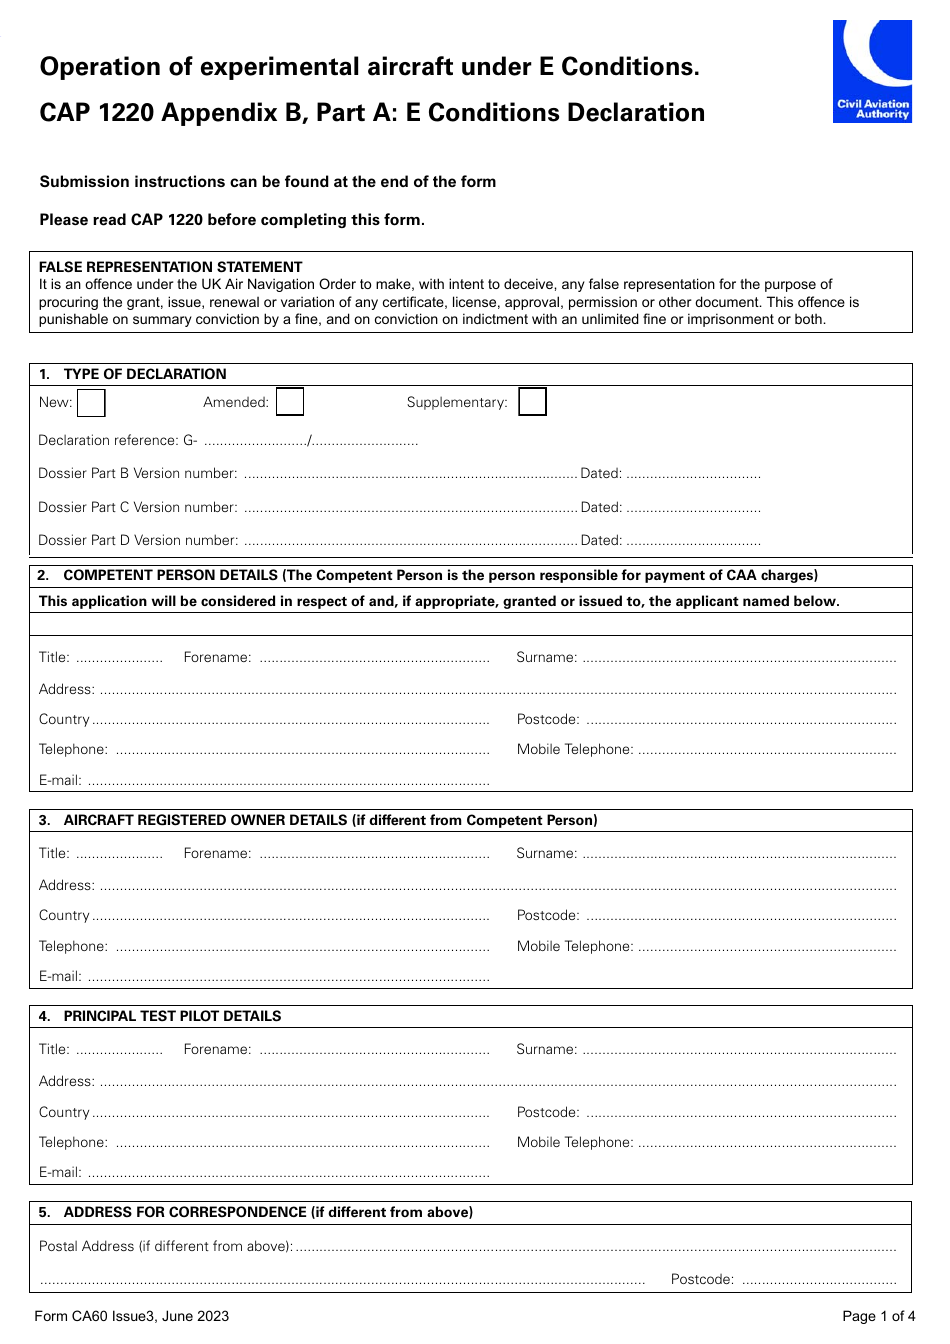 Form CA60 Operation of Experimental Aircraft Under E Conditions - CAP 1220 Appendix B, Part a: E Conditions Declaration - United Kingdom, Page 1